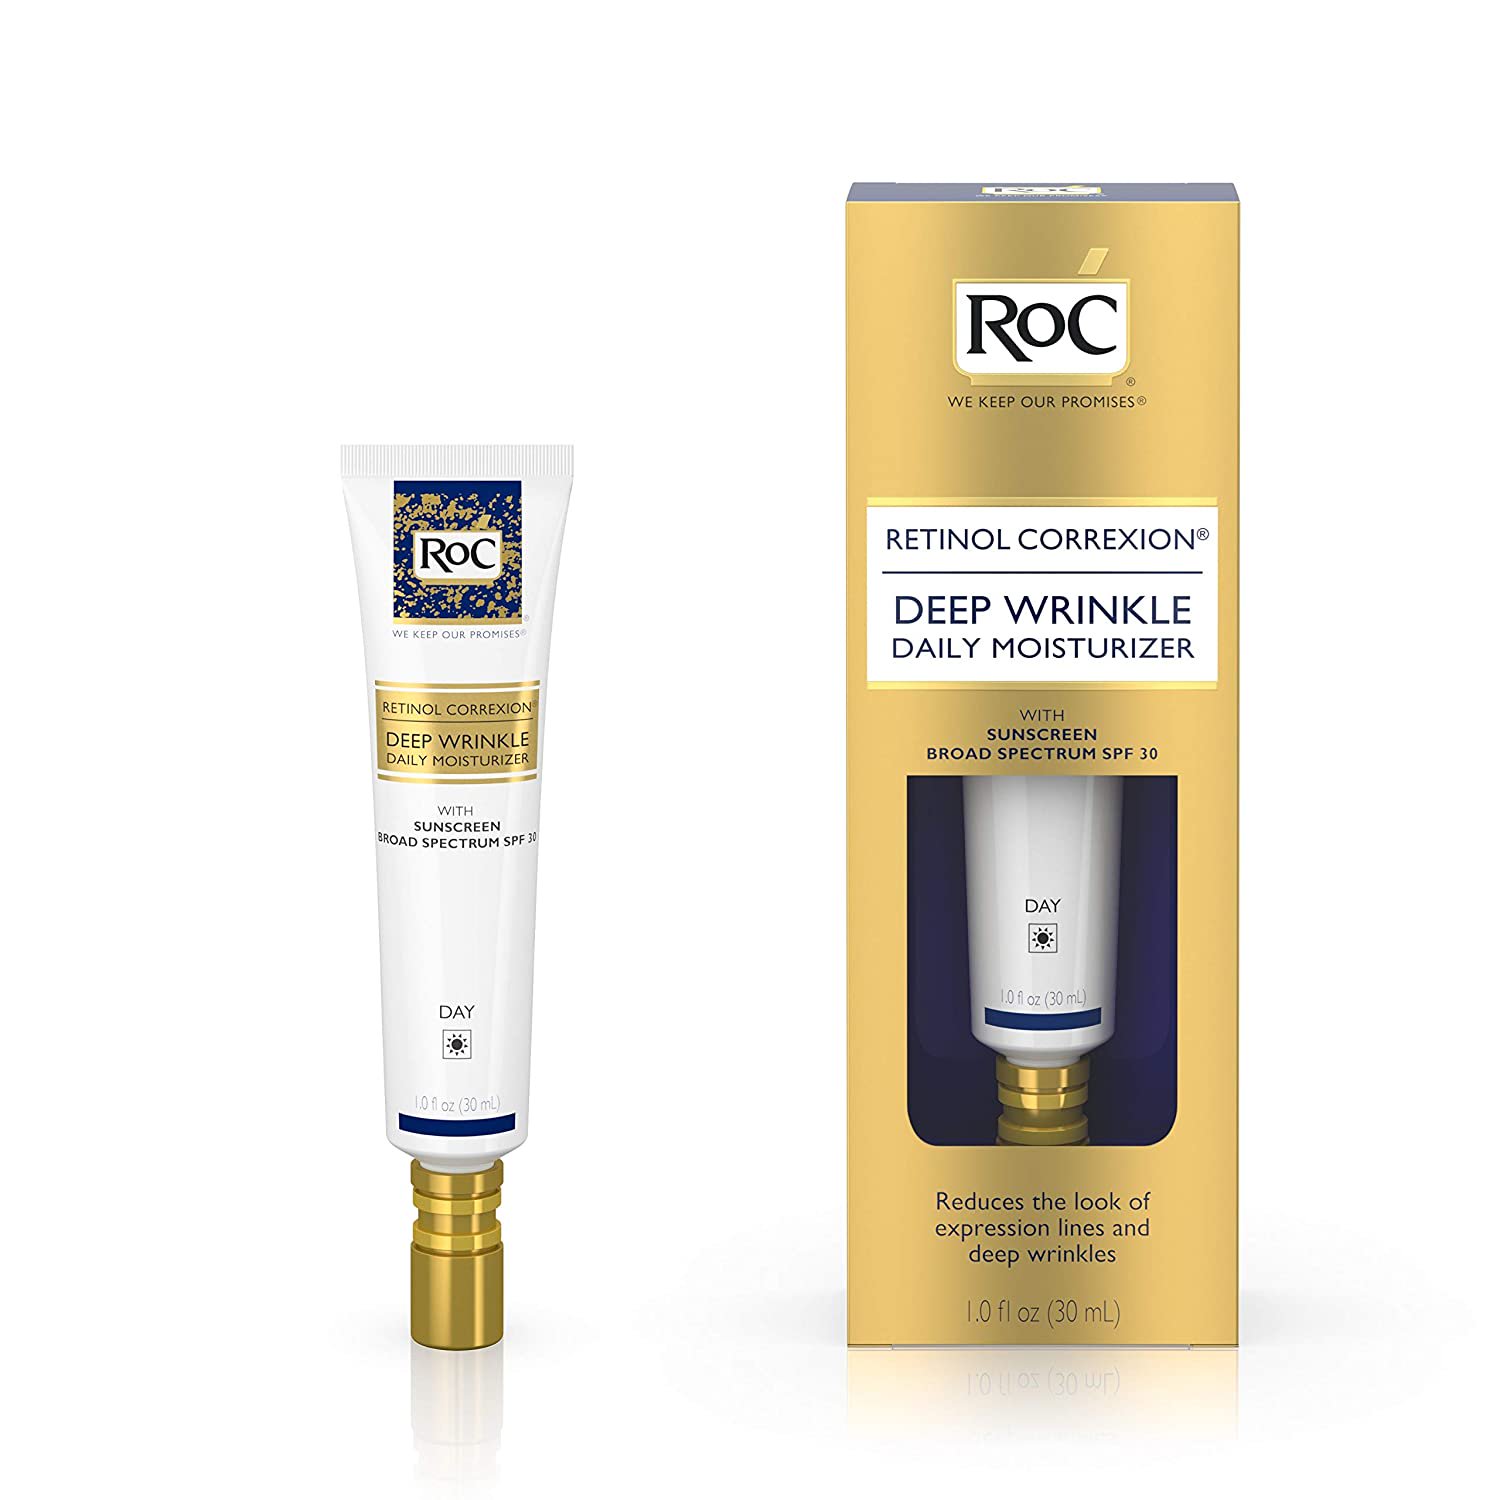 RoC Retinol Correxion Deep Wrinkle Daily Moisturizer Cream, SPF 30, 1 fl oz - image 1 of 2